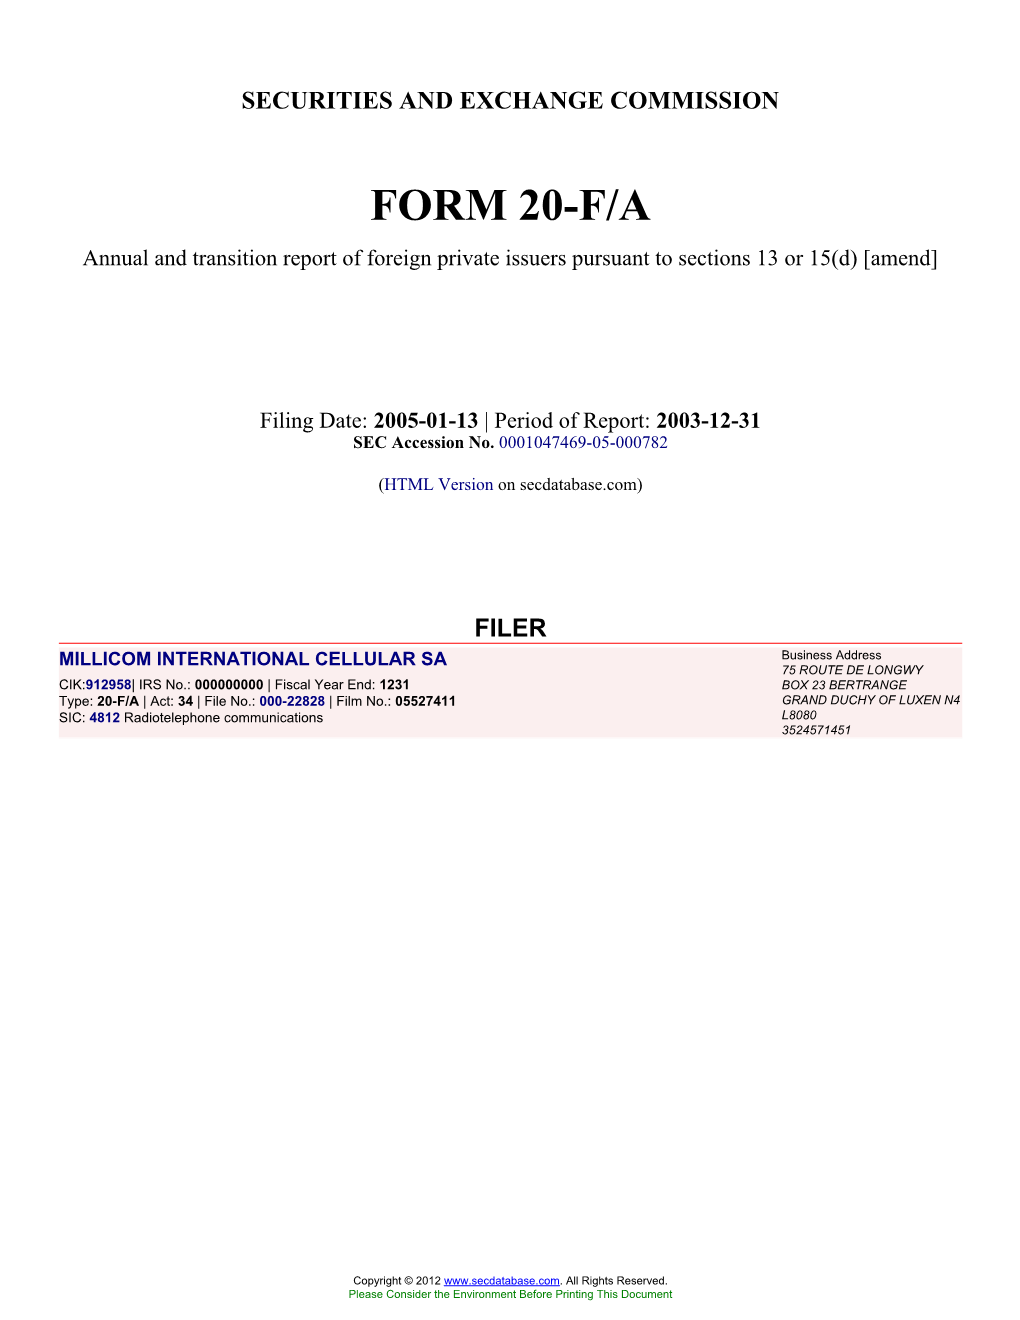 MILLICOM INTERNATIONAL CELLULAR SA (Form: 20-F/A